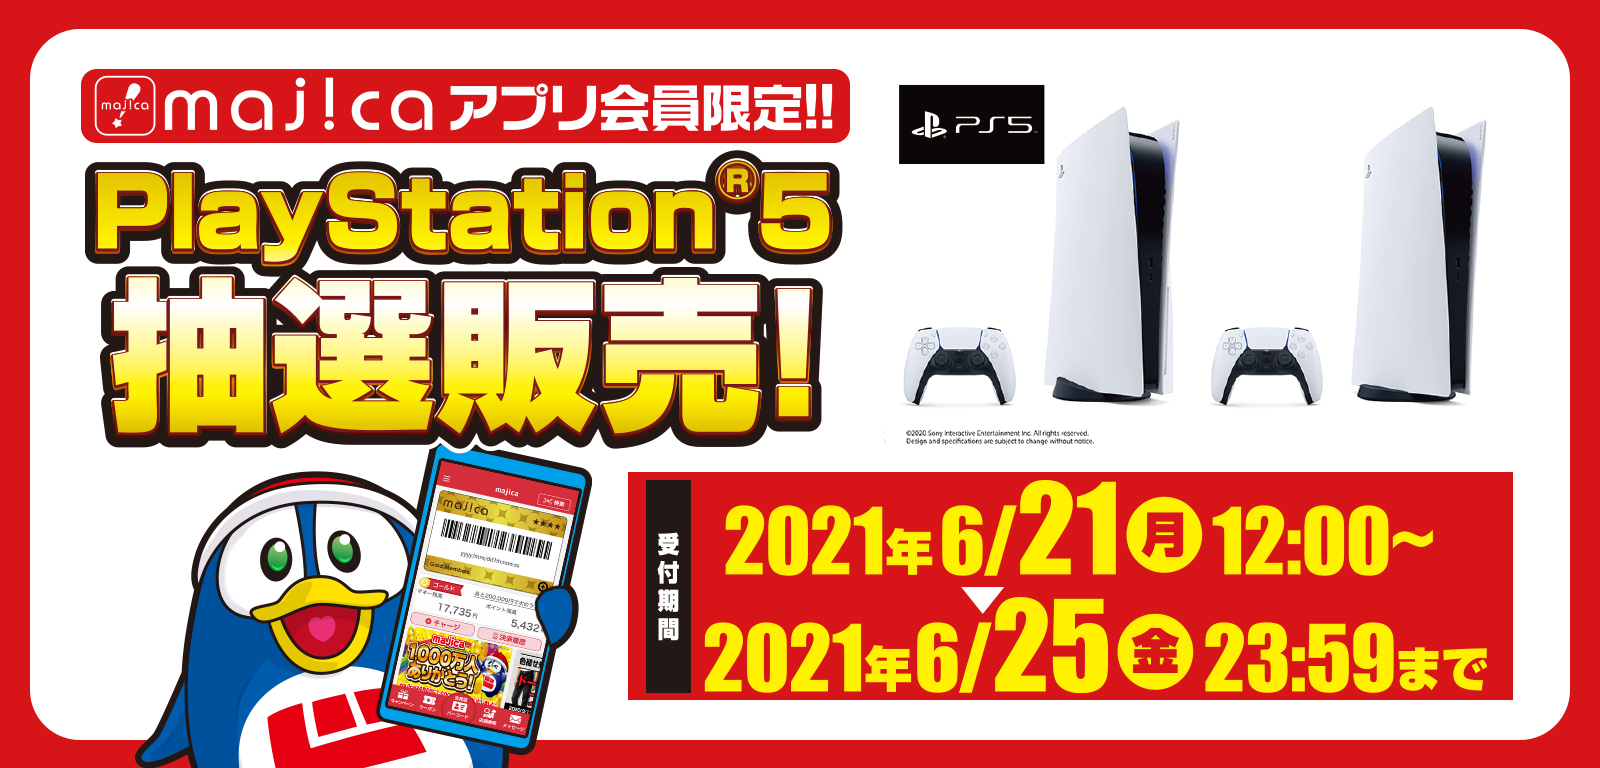 majicaアプリ会員限定！！PlayStation®5抽選販売！ 受付期間：2021年5月24日（月）12:00 ～ 2021年5月25日（火）23:59まで